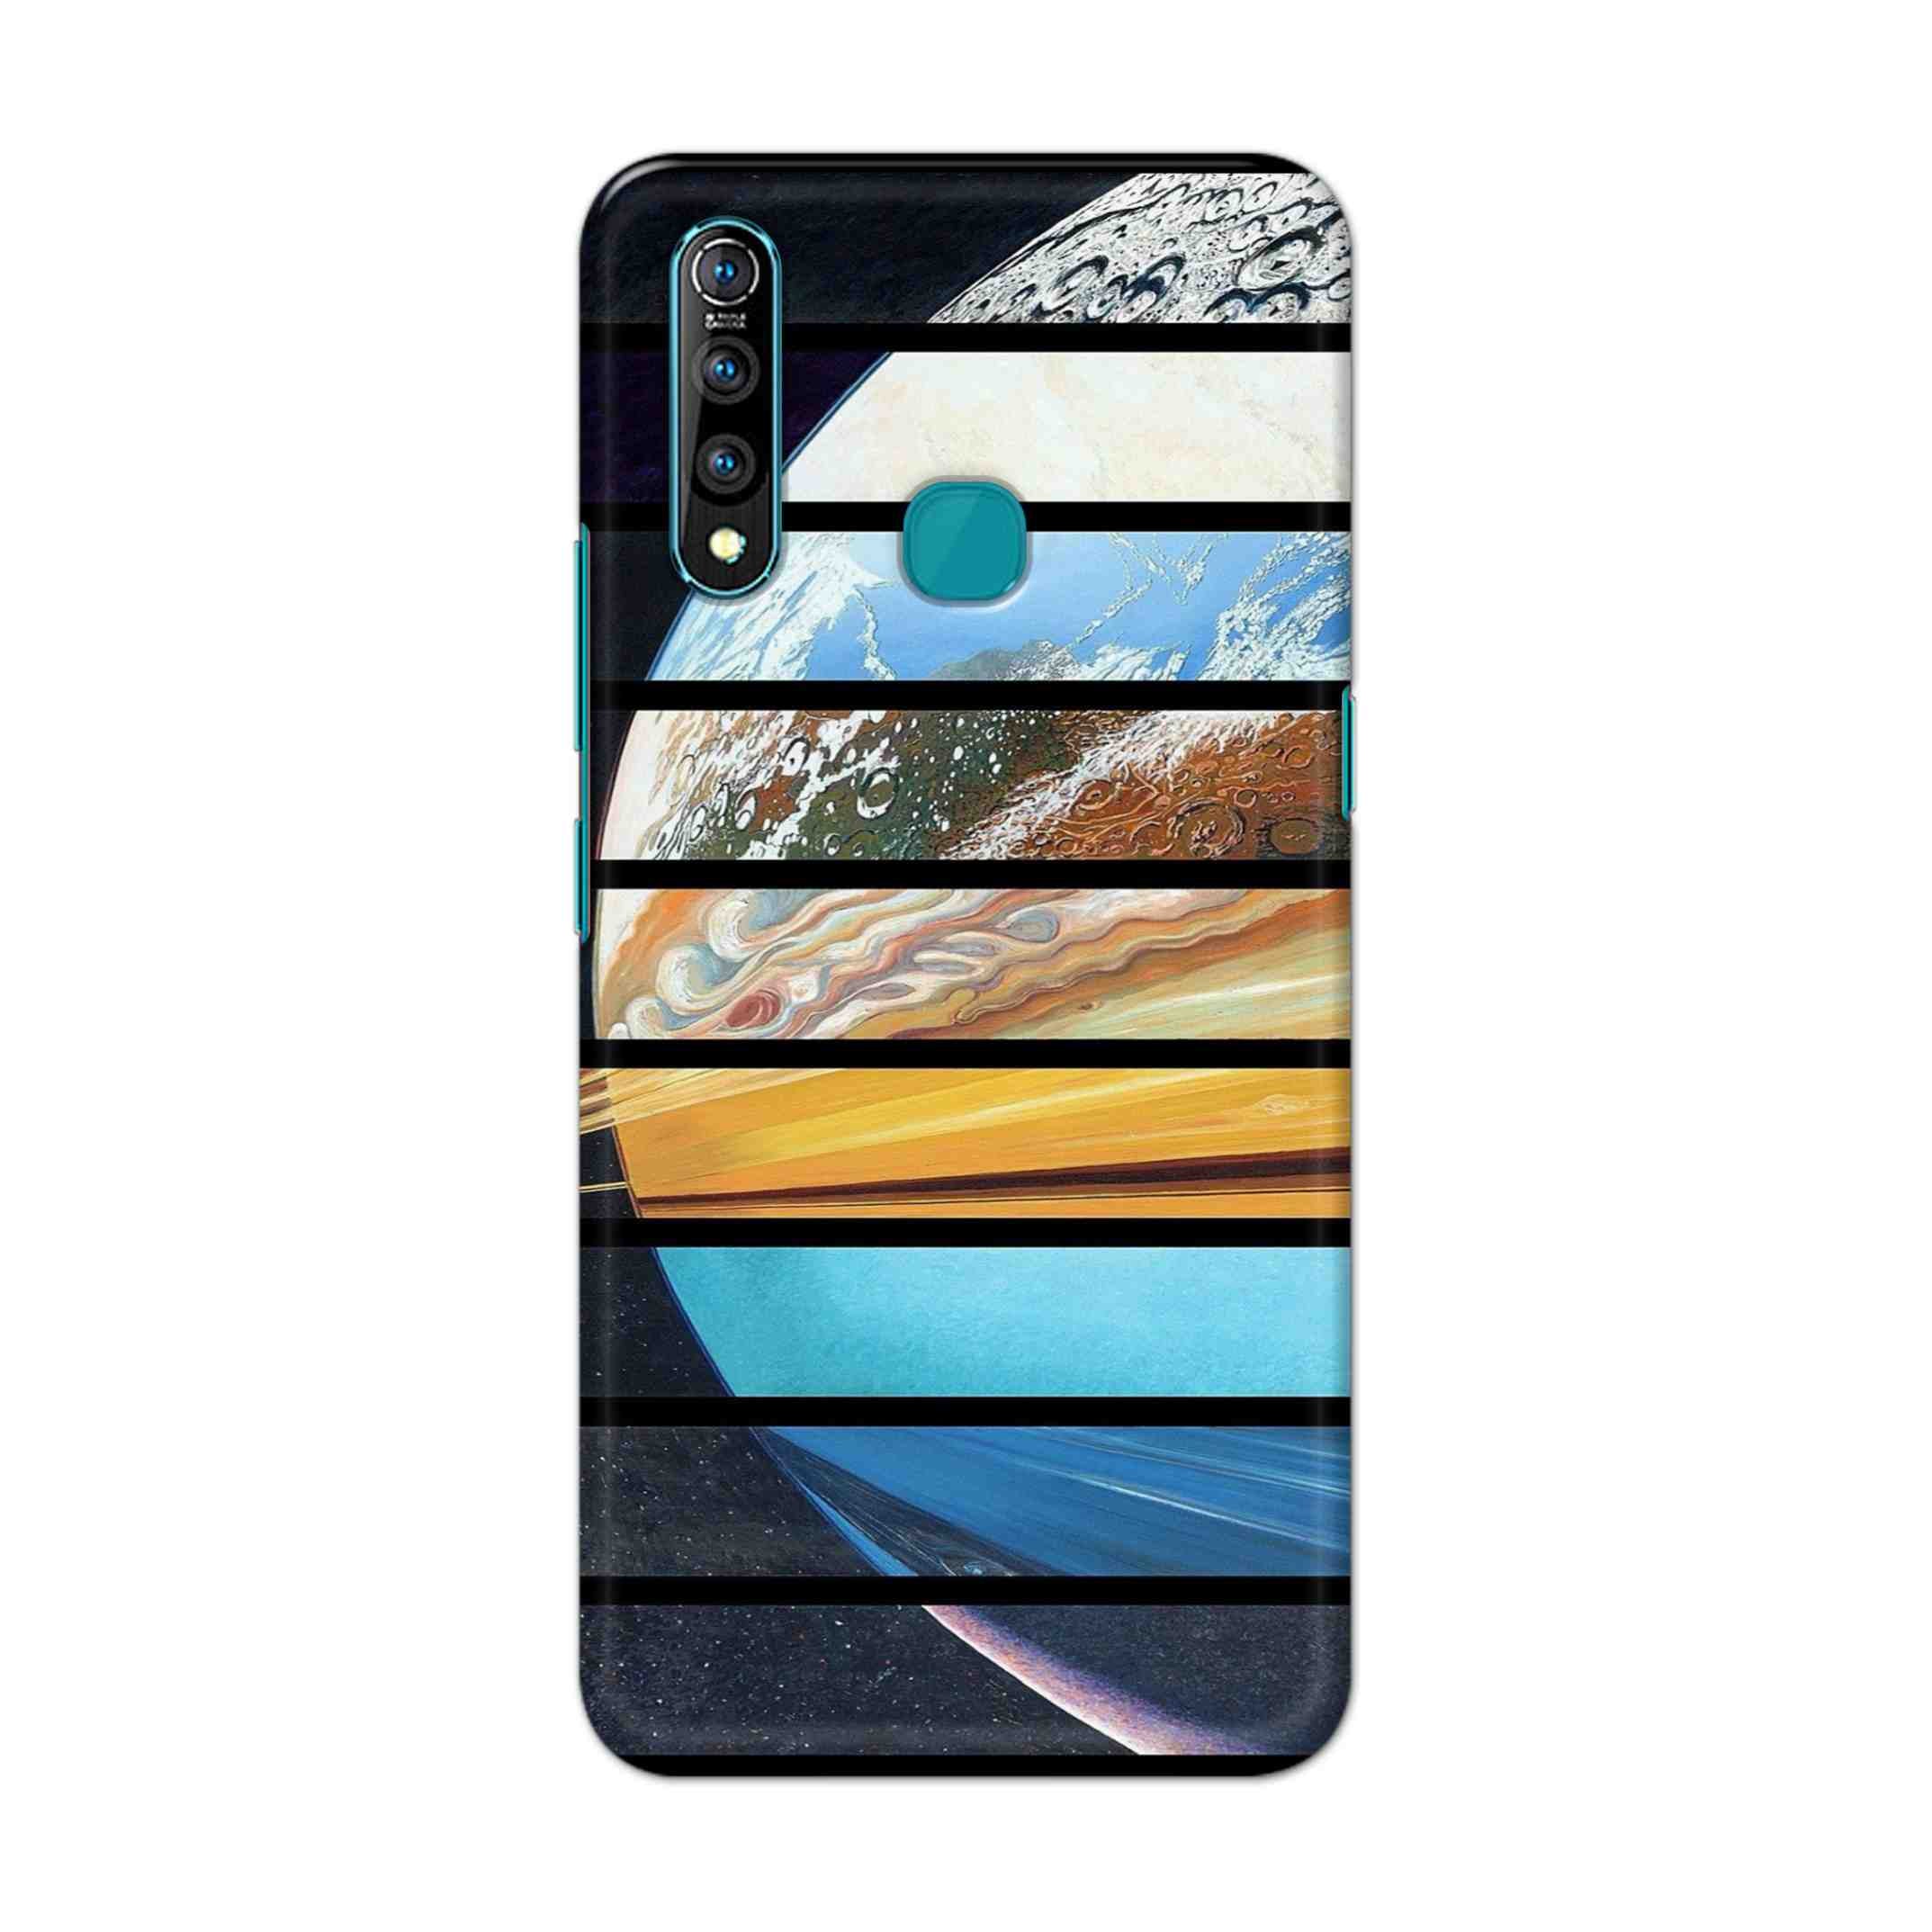 Buy Colourful Earth Hard Back Mobile Phone Case Cover For Vivo Z1 pro Online